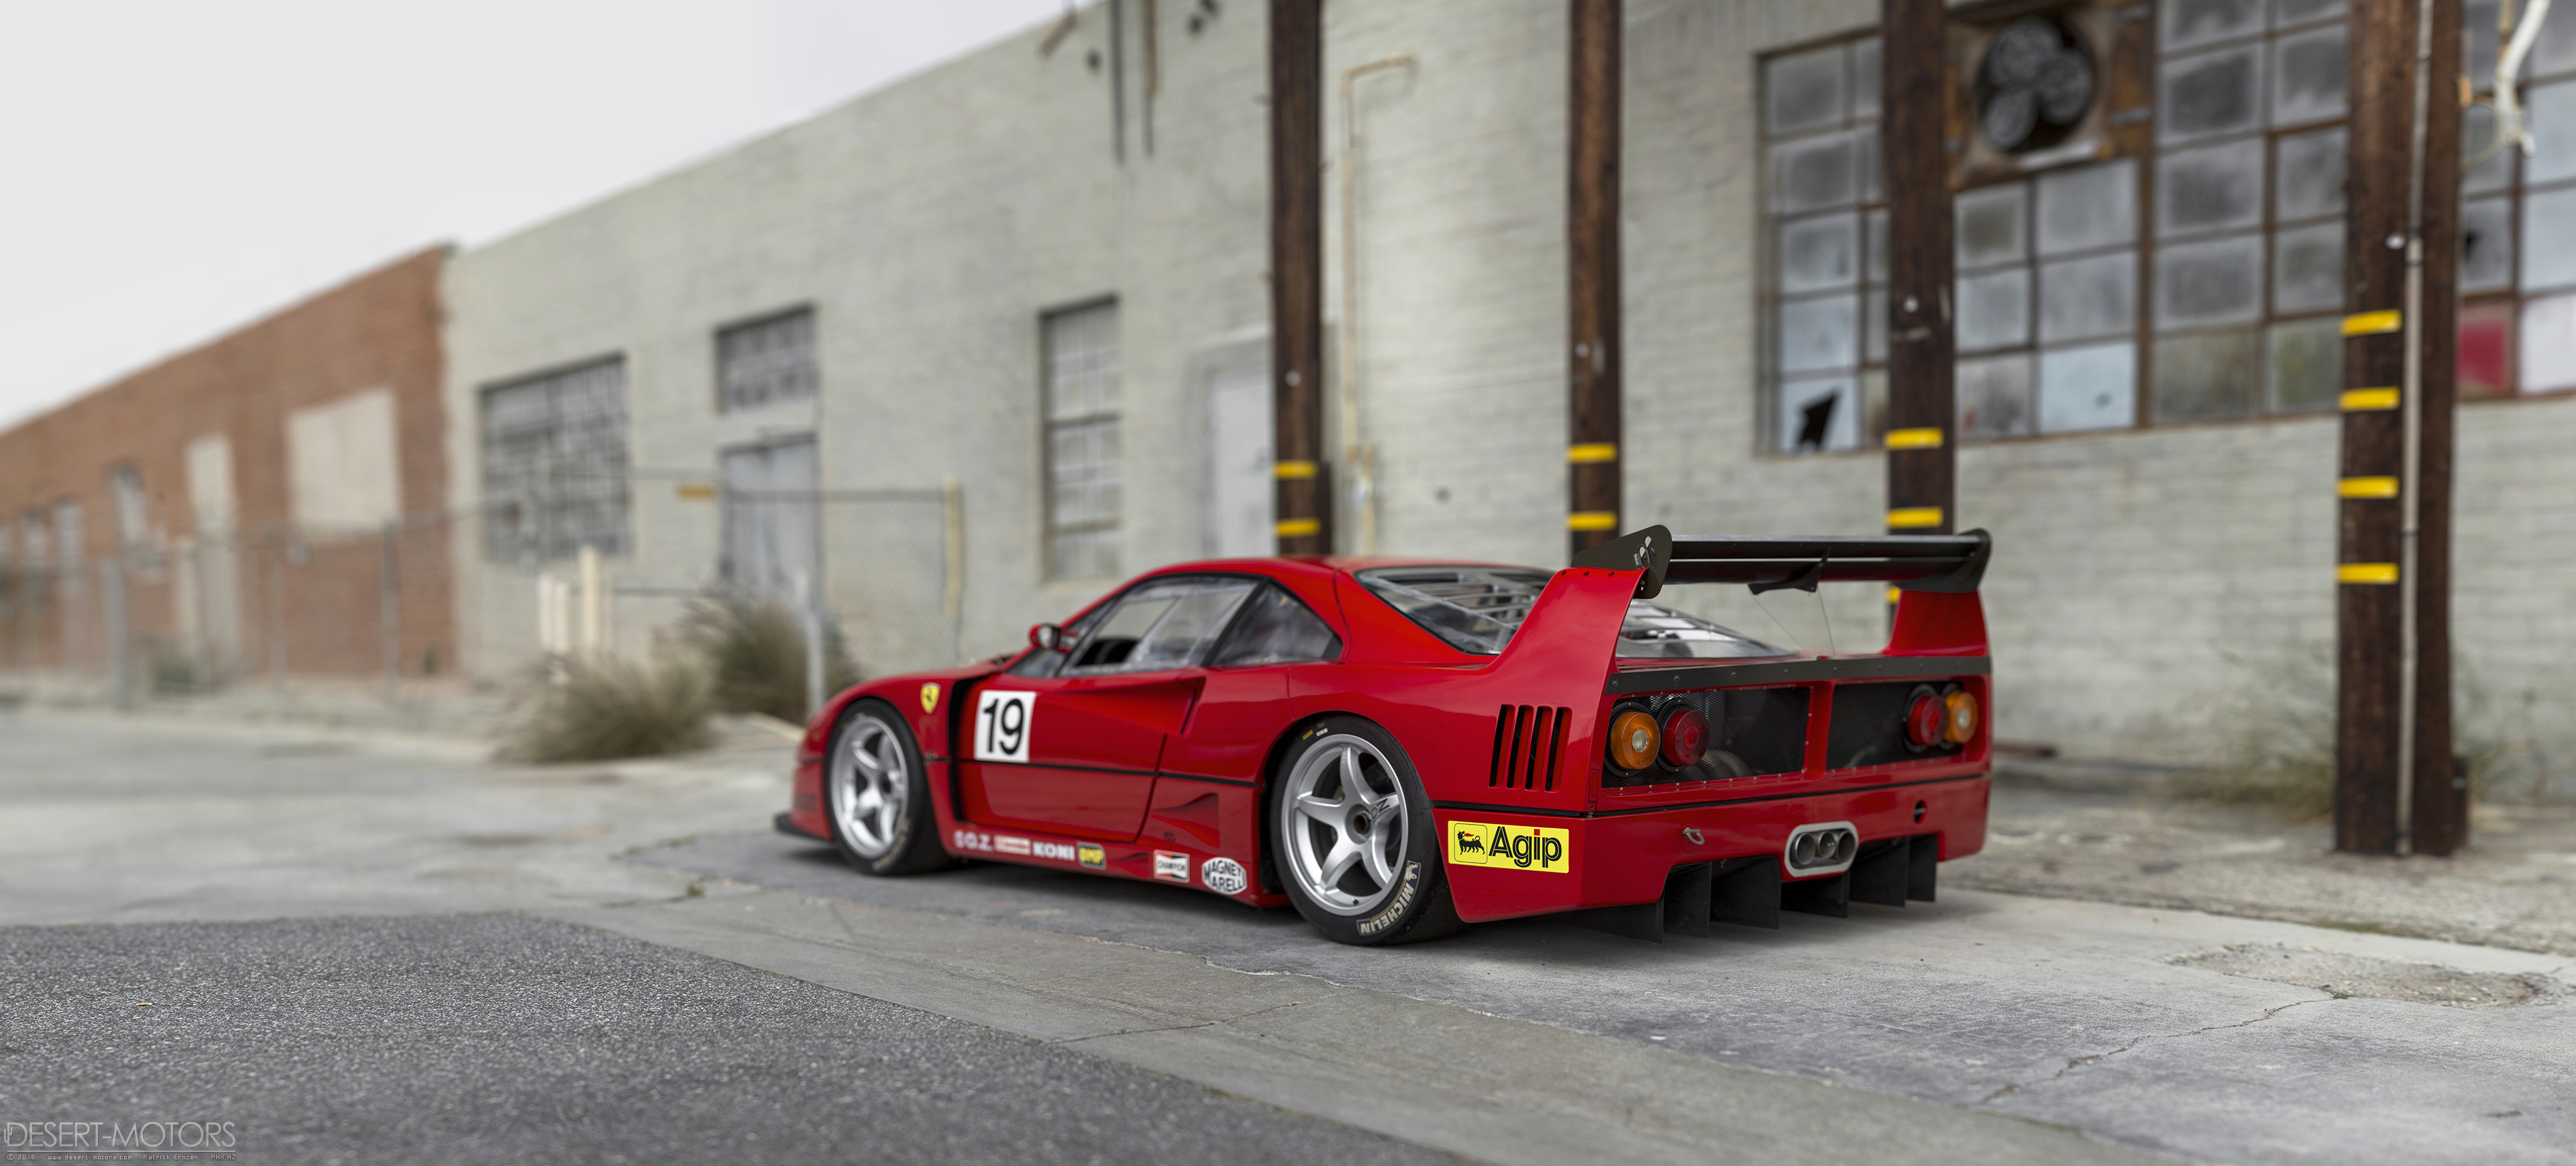 Ferrari Ferrari F40 Red Cars Race Cars Le Mans 3840x1738